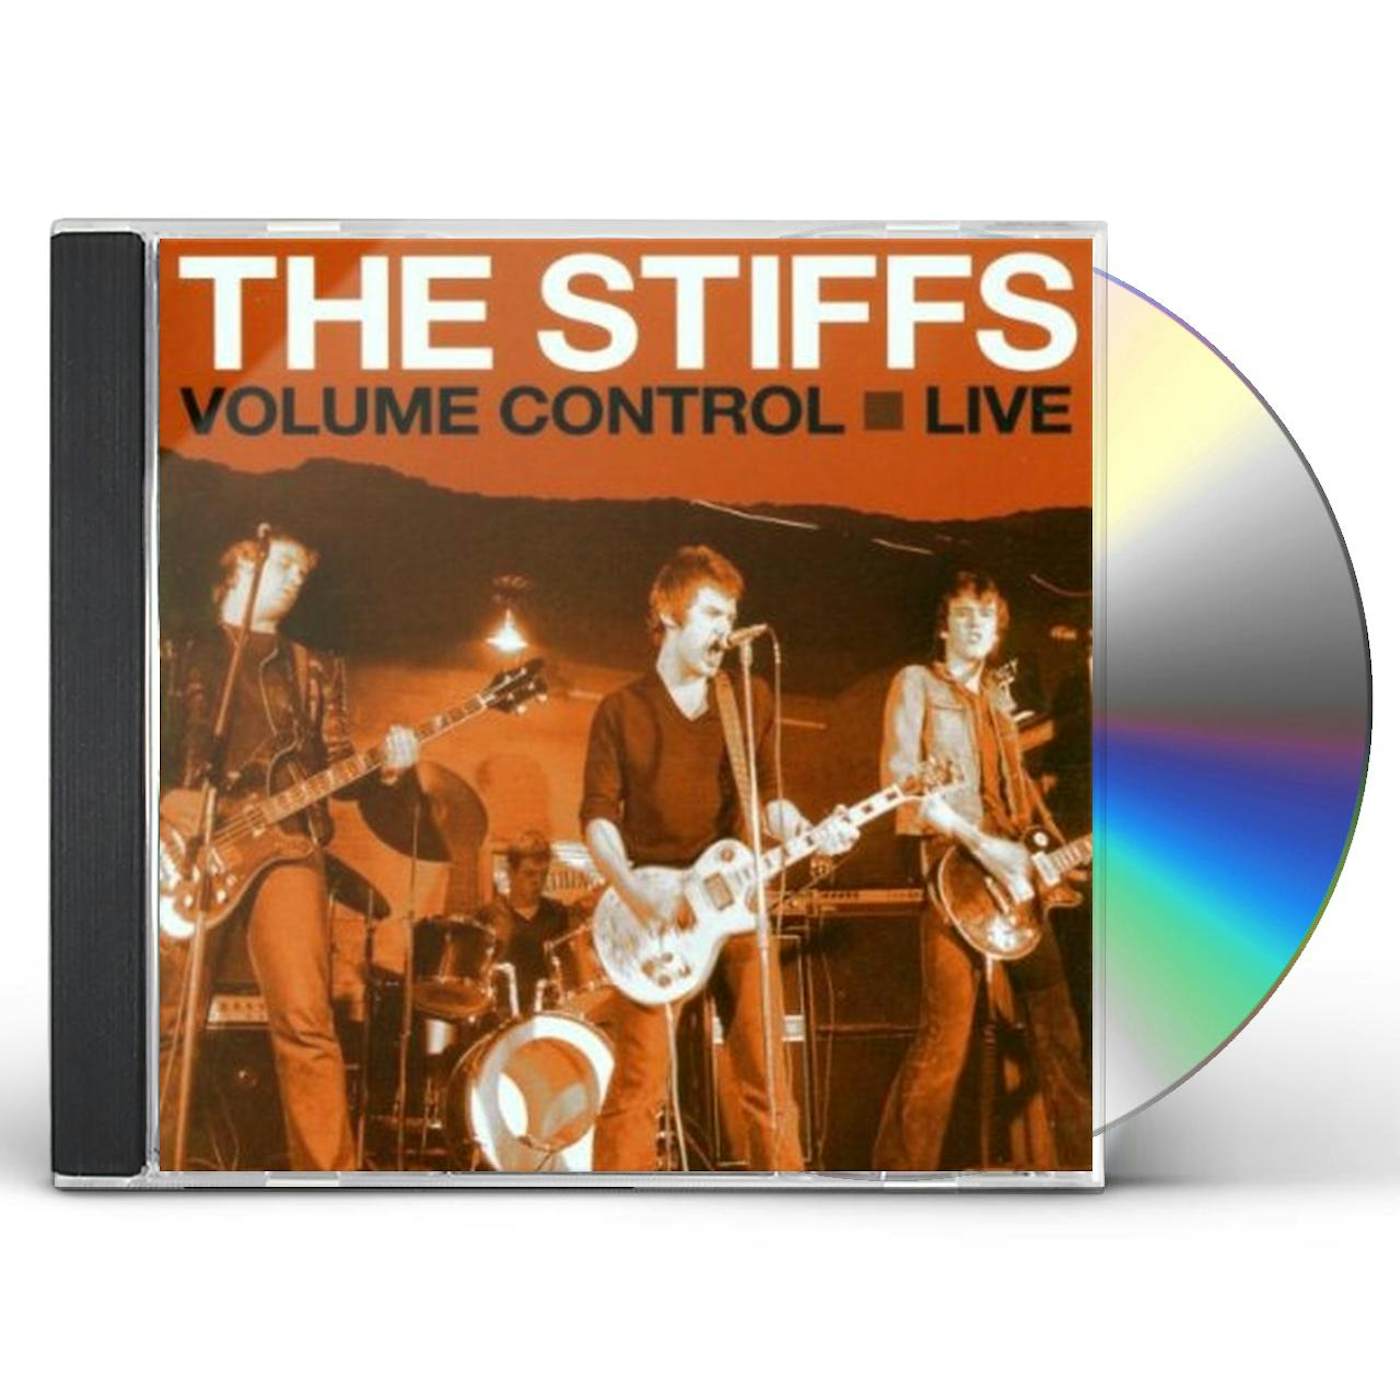 The Stiffs VOLUME CONTROL: LIVE CD